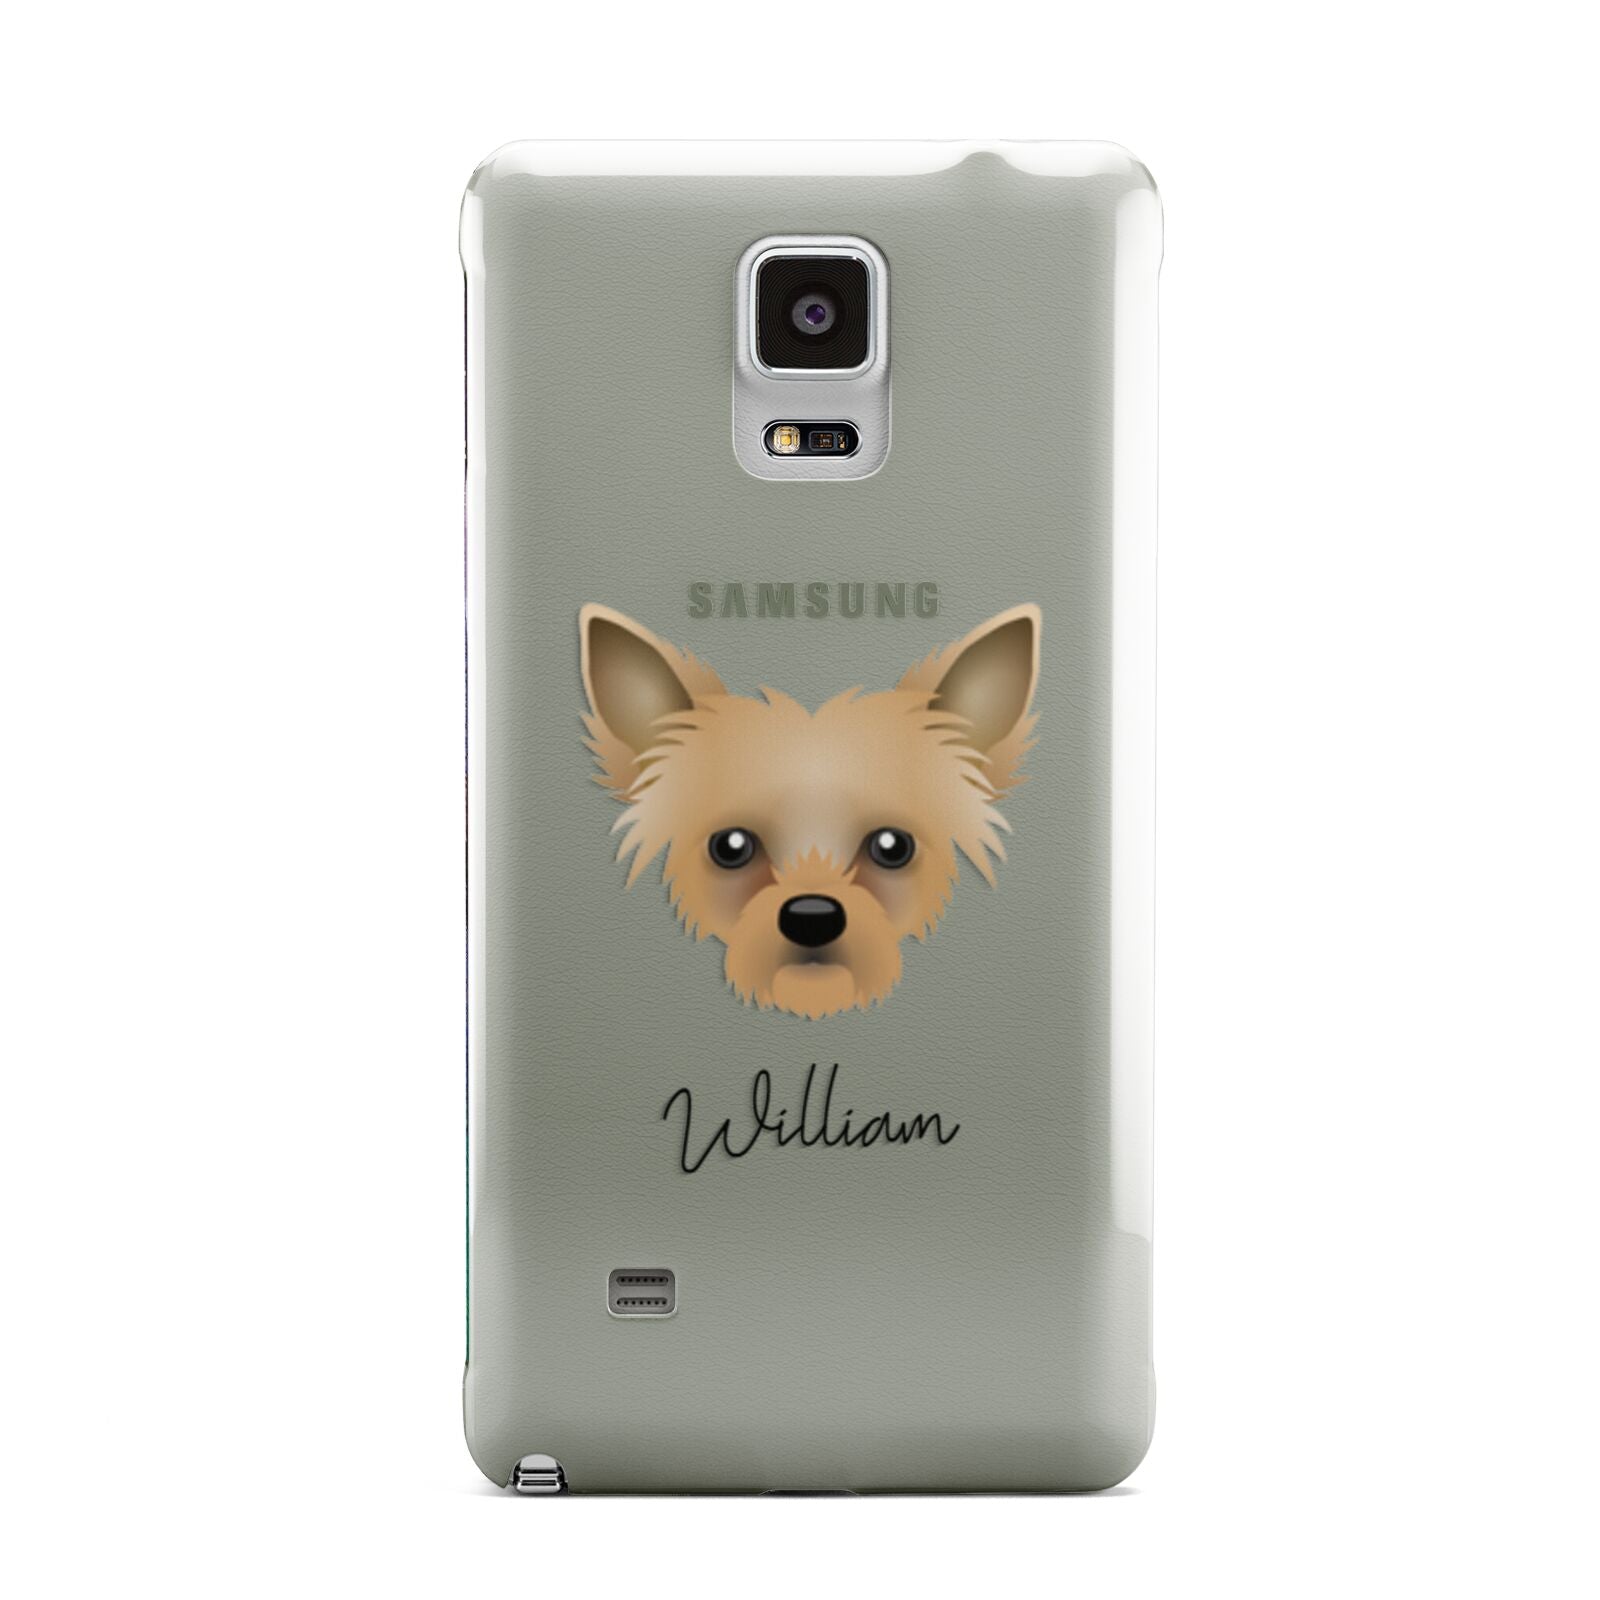 Chipoo Personalised Samsung Galaxy Note 4 Case